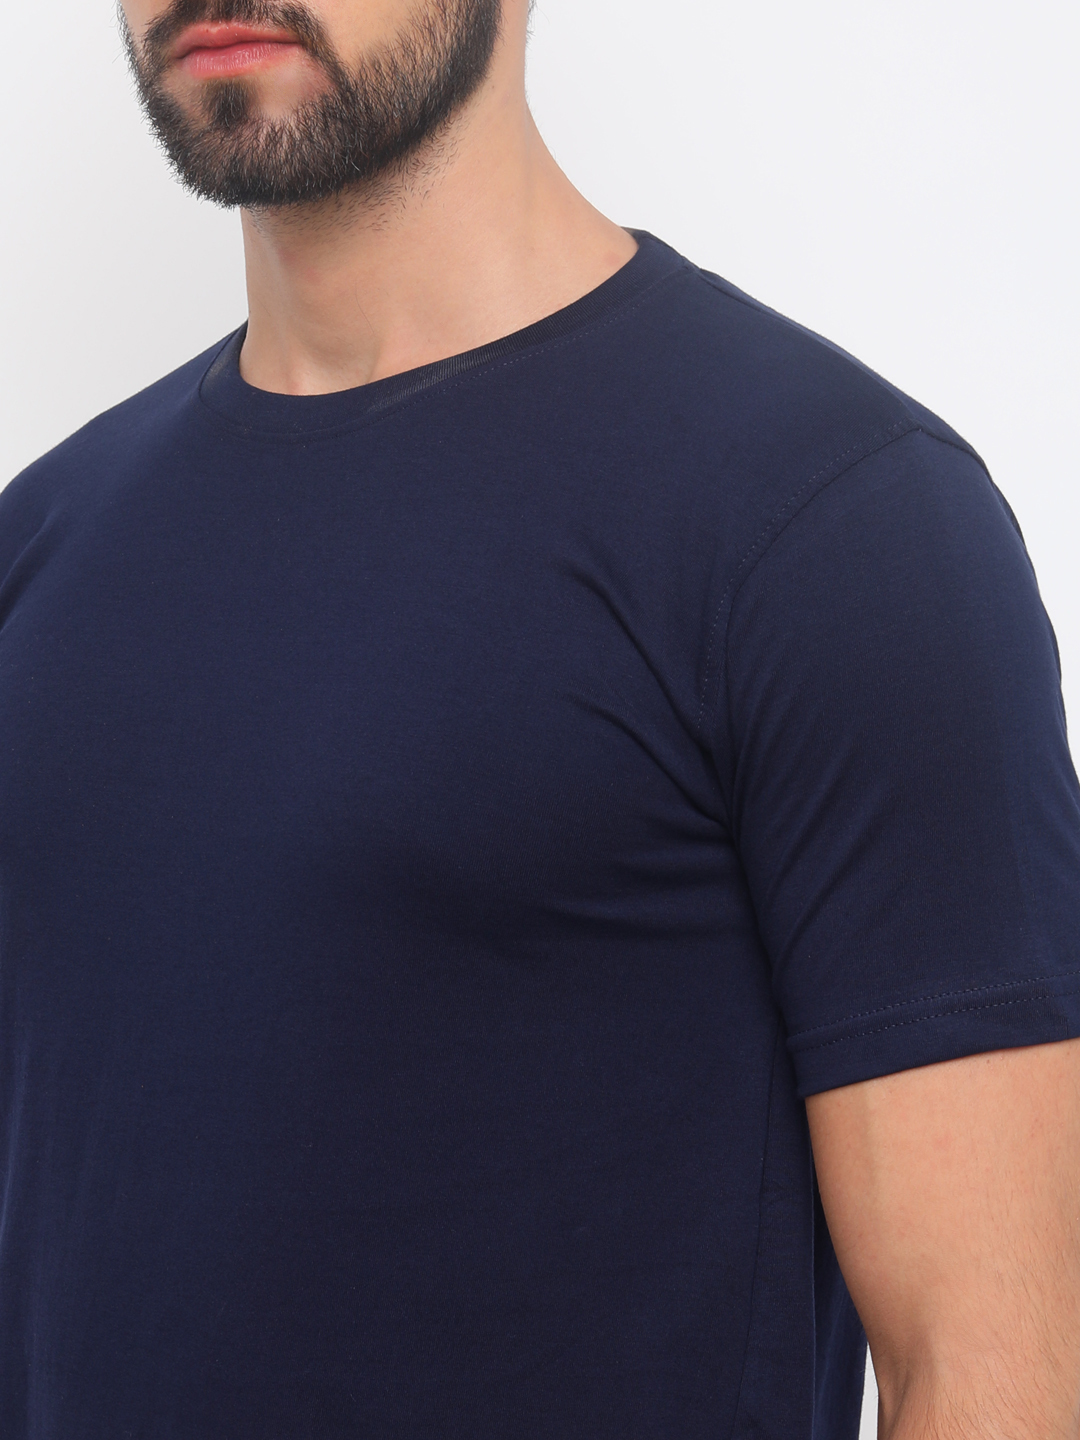 Navy Blue Plain T shirts